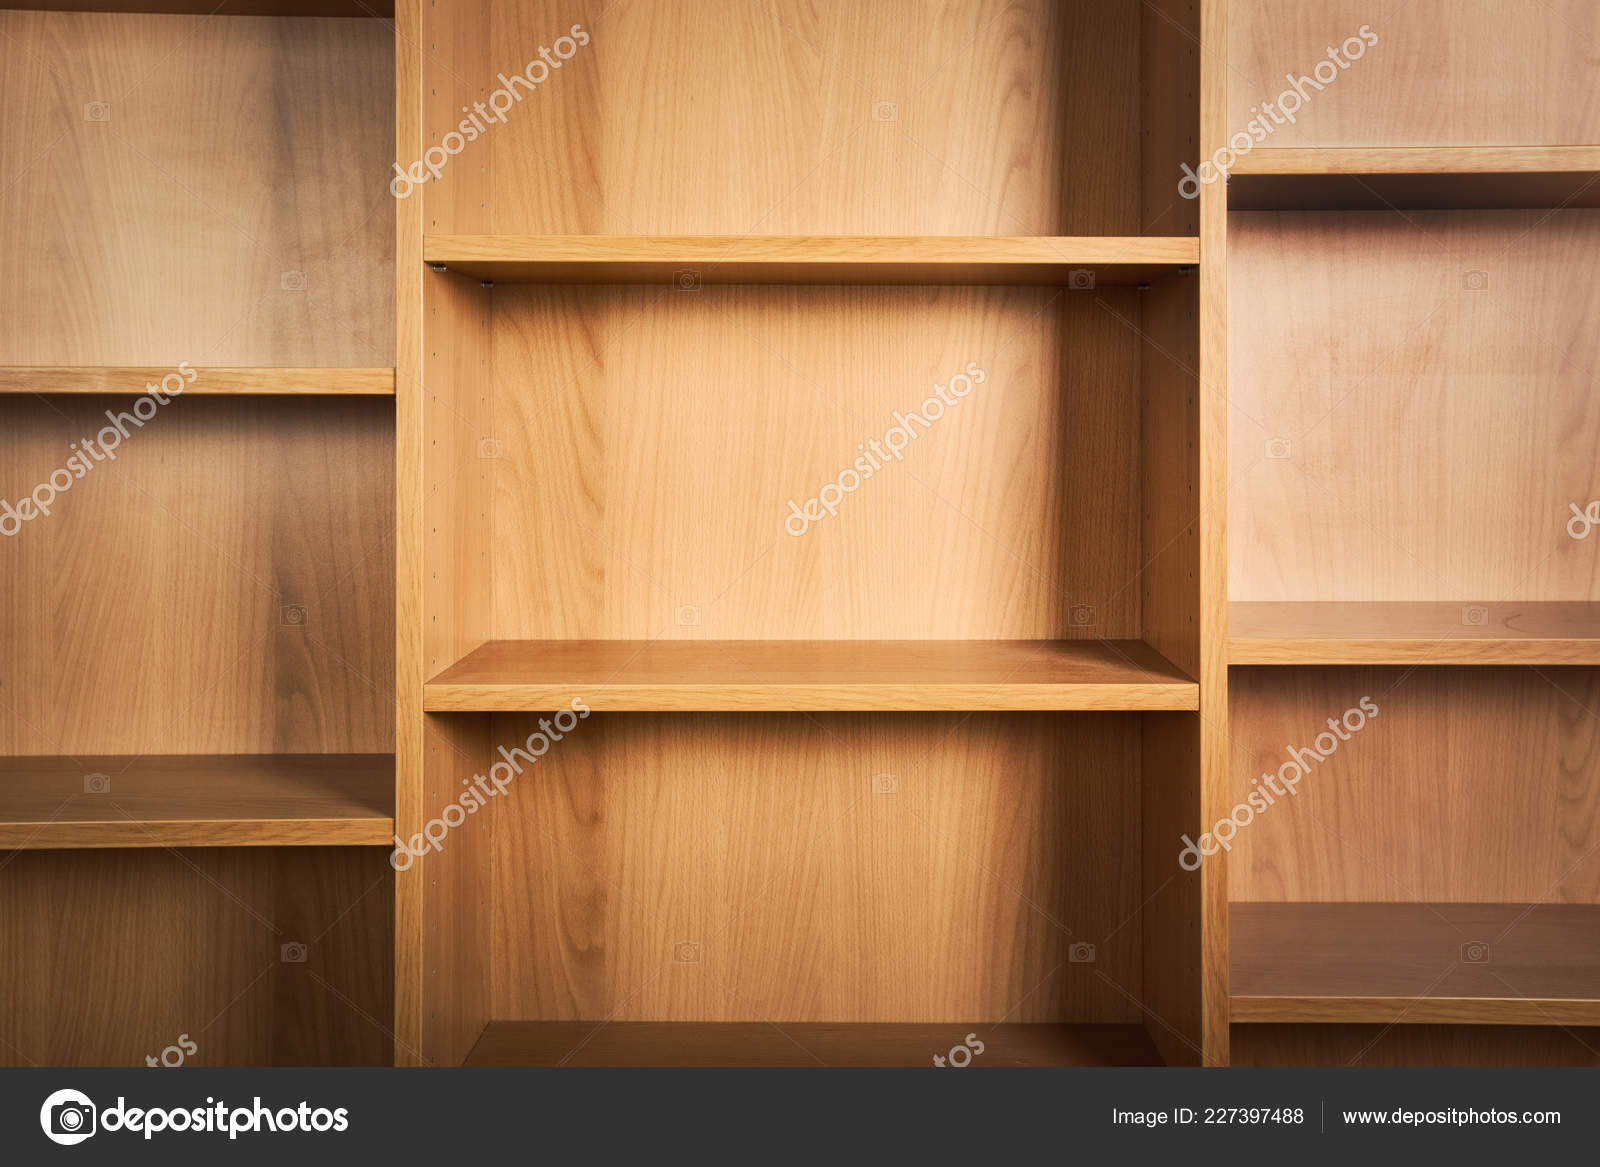 Empty Wooden Book Shelves Background, Wooden Book Shelves